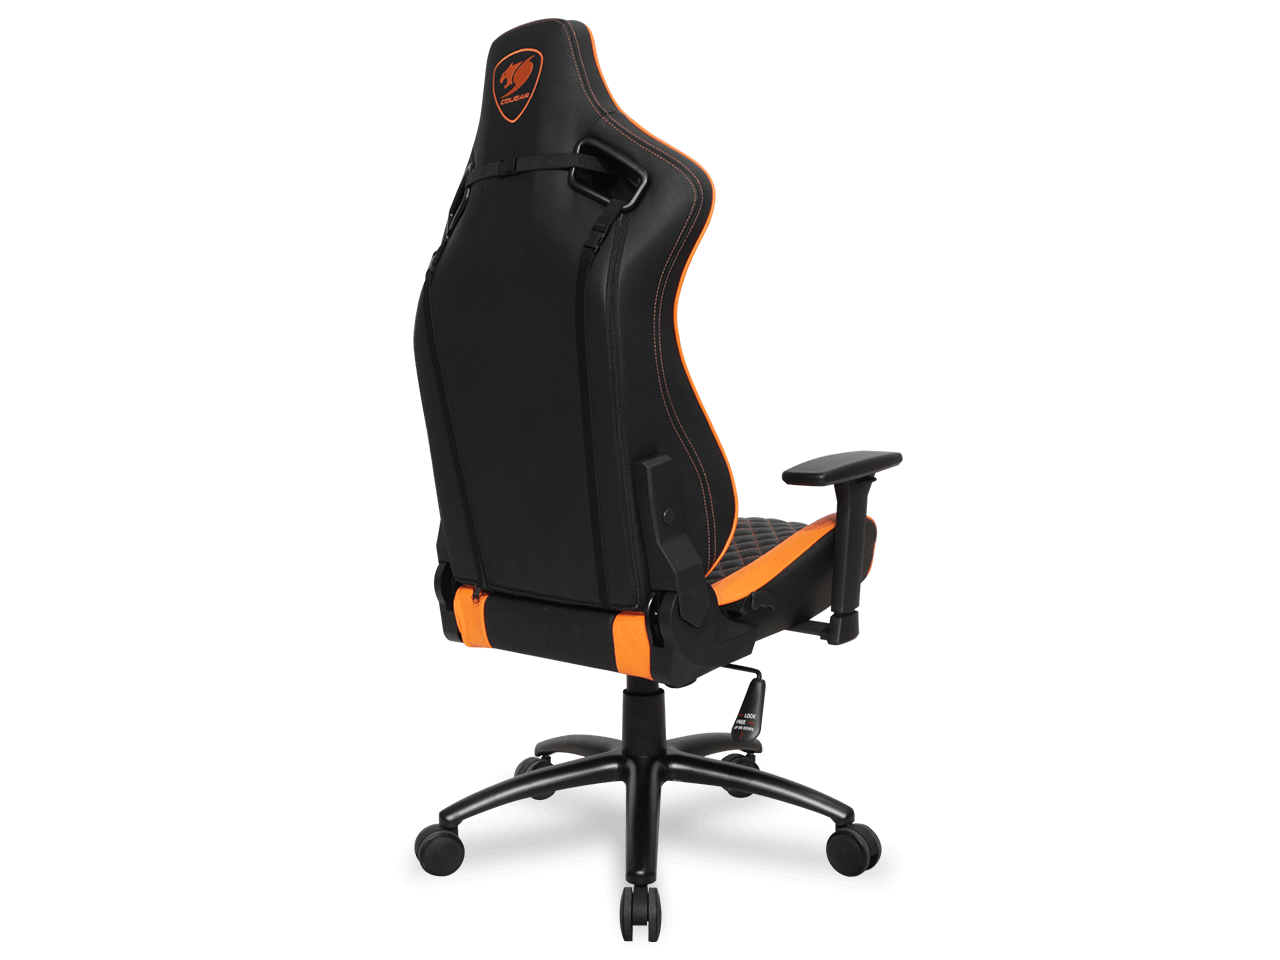 Cougar Explore S Black - Gaming Chair